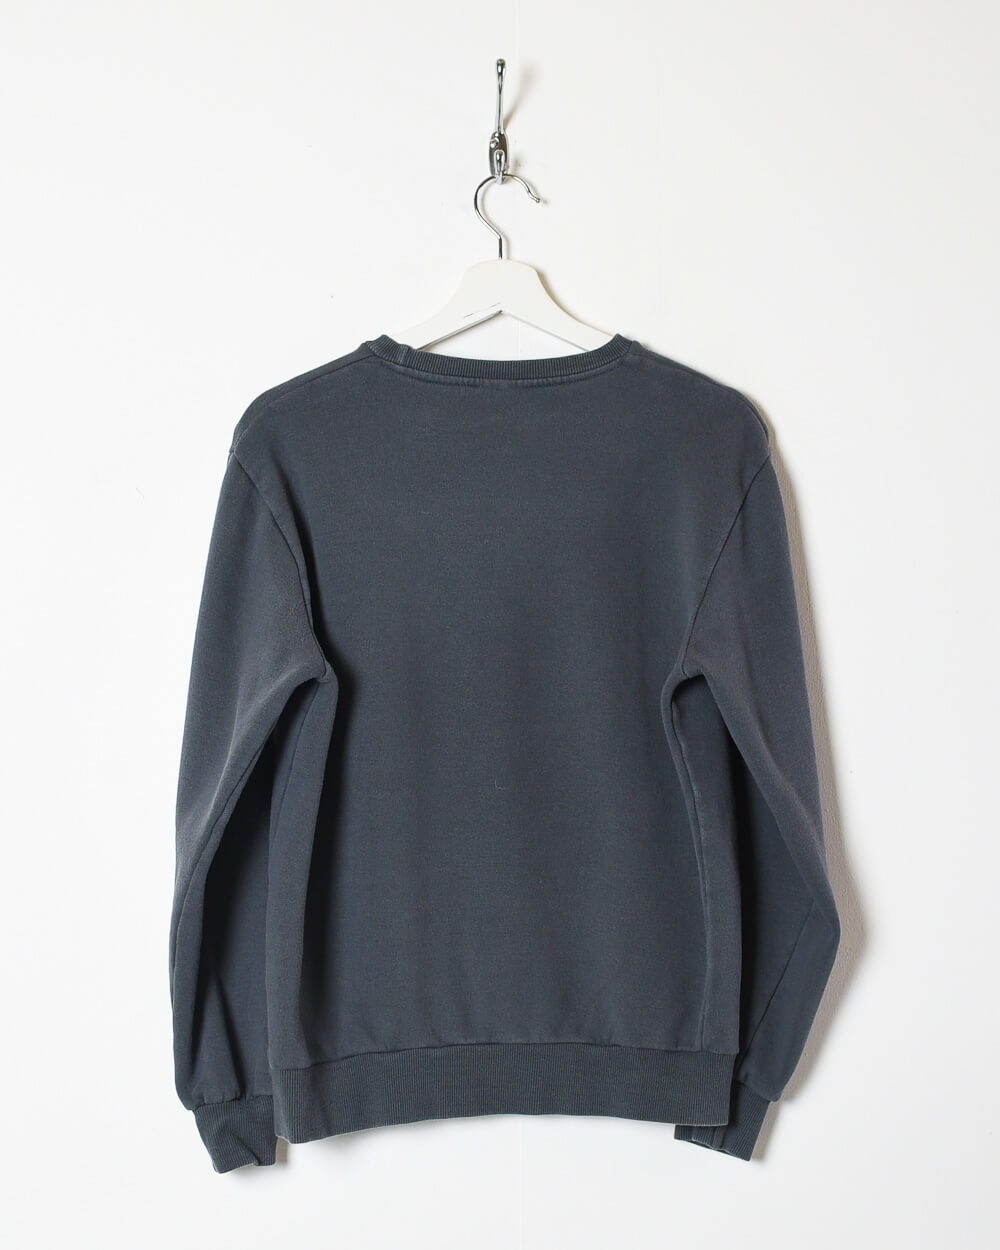 Grey Ellesse Sweatshirt - X-Small